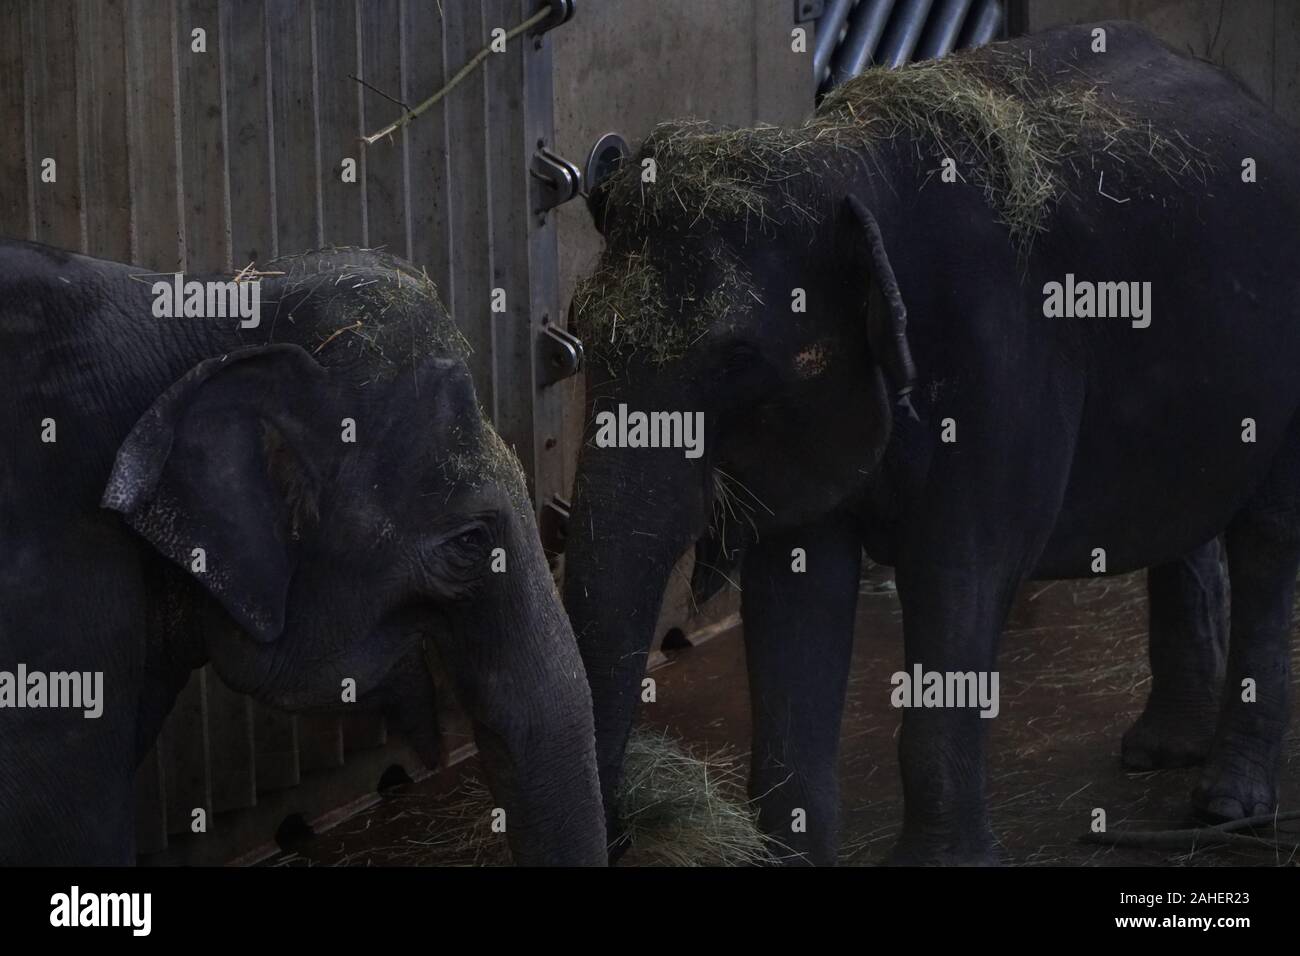 couple of elephants eating at zoo Stock Photo